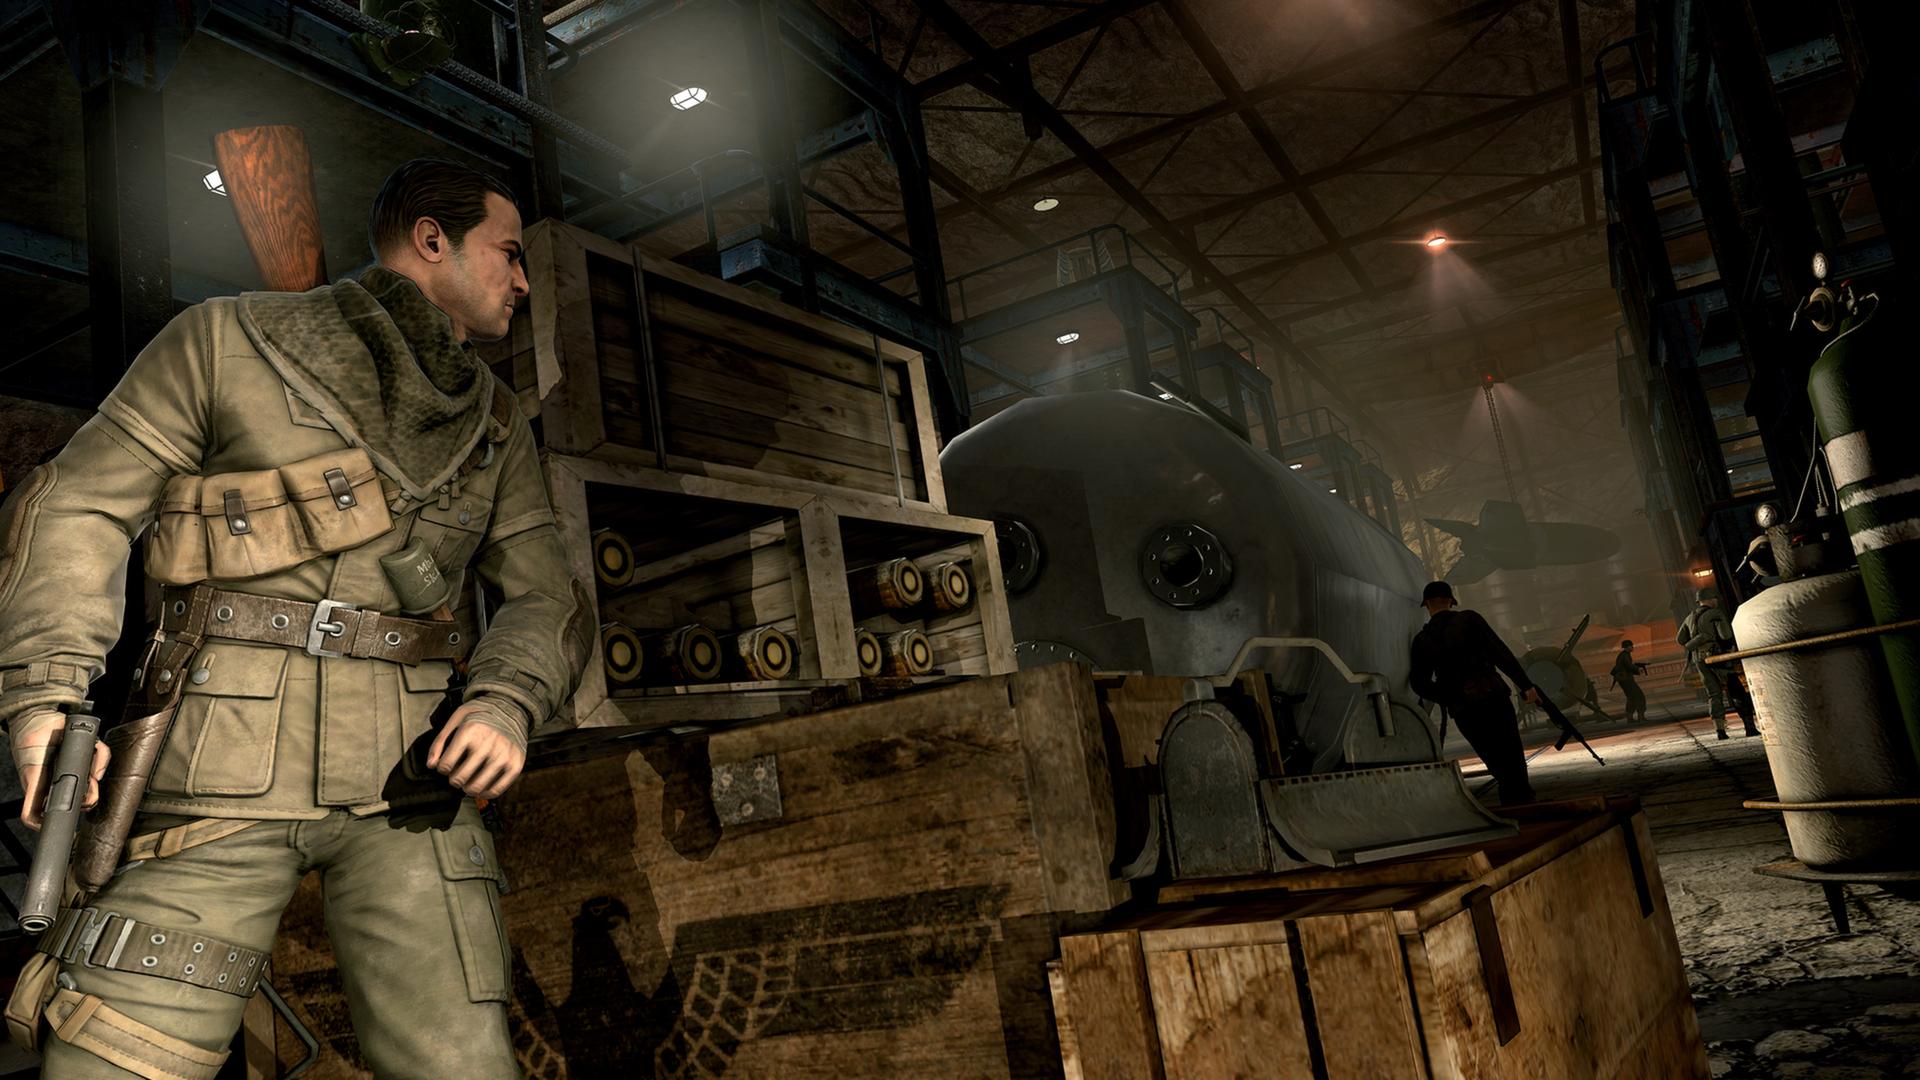 Screenshot №15 from game Sniper Elite V2